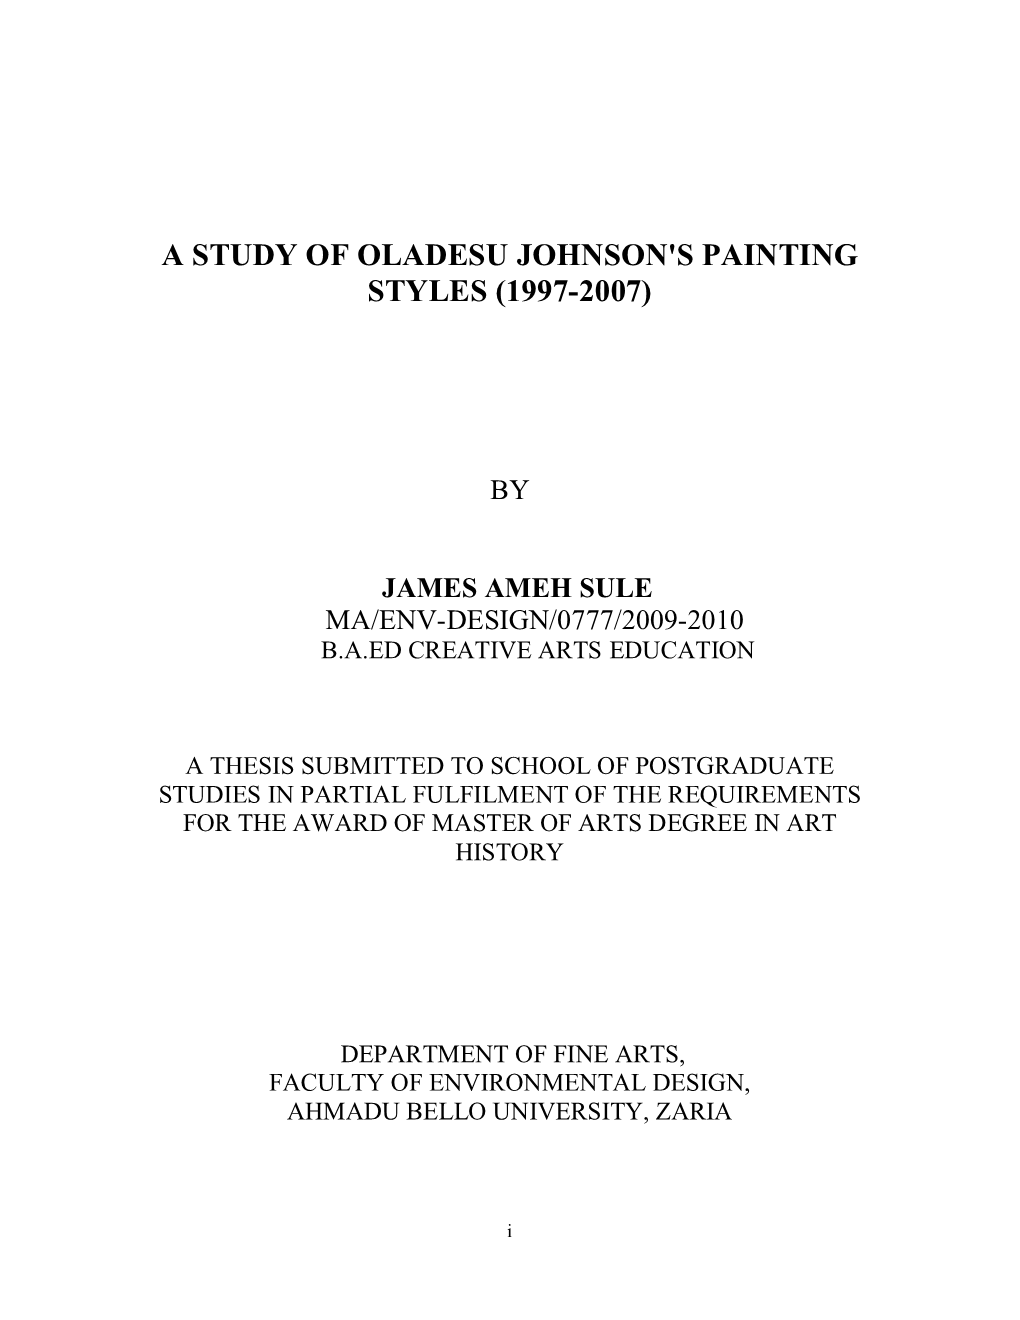 A Study of Oladesu Johnson's Painting Styles (1997-2007)